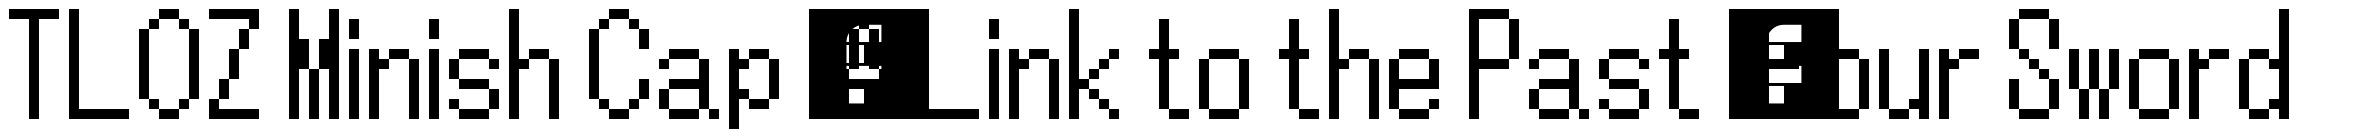 TLOZ Minish Cap / A Link to the Past / Four Sword font